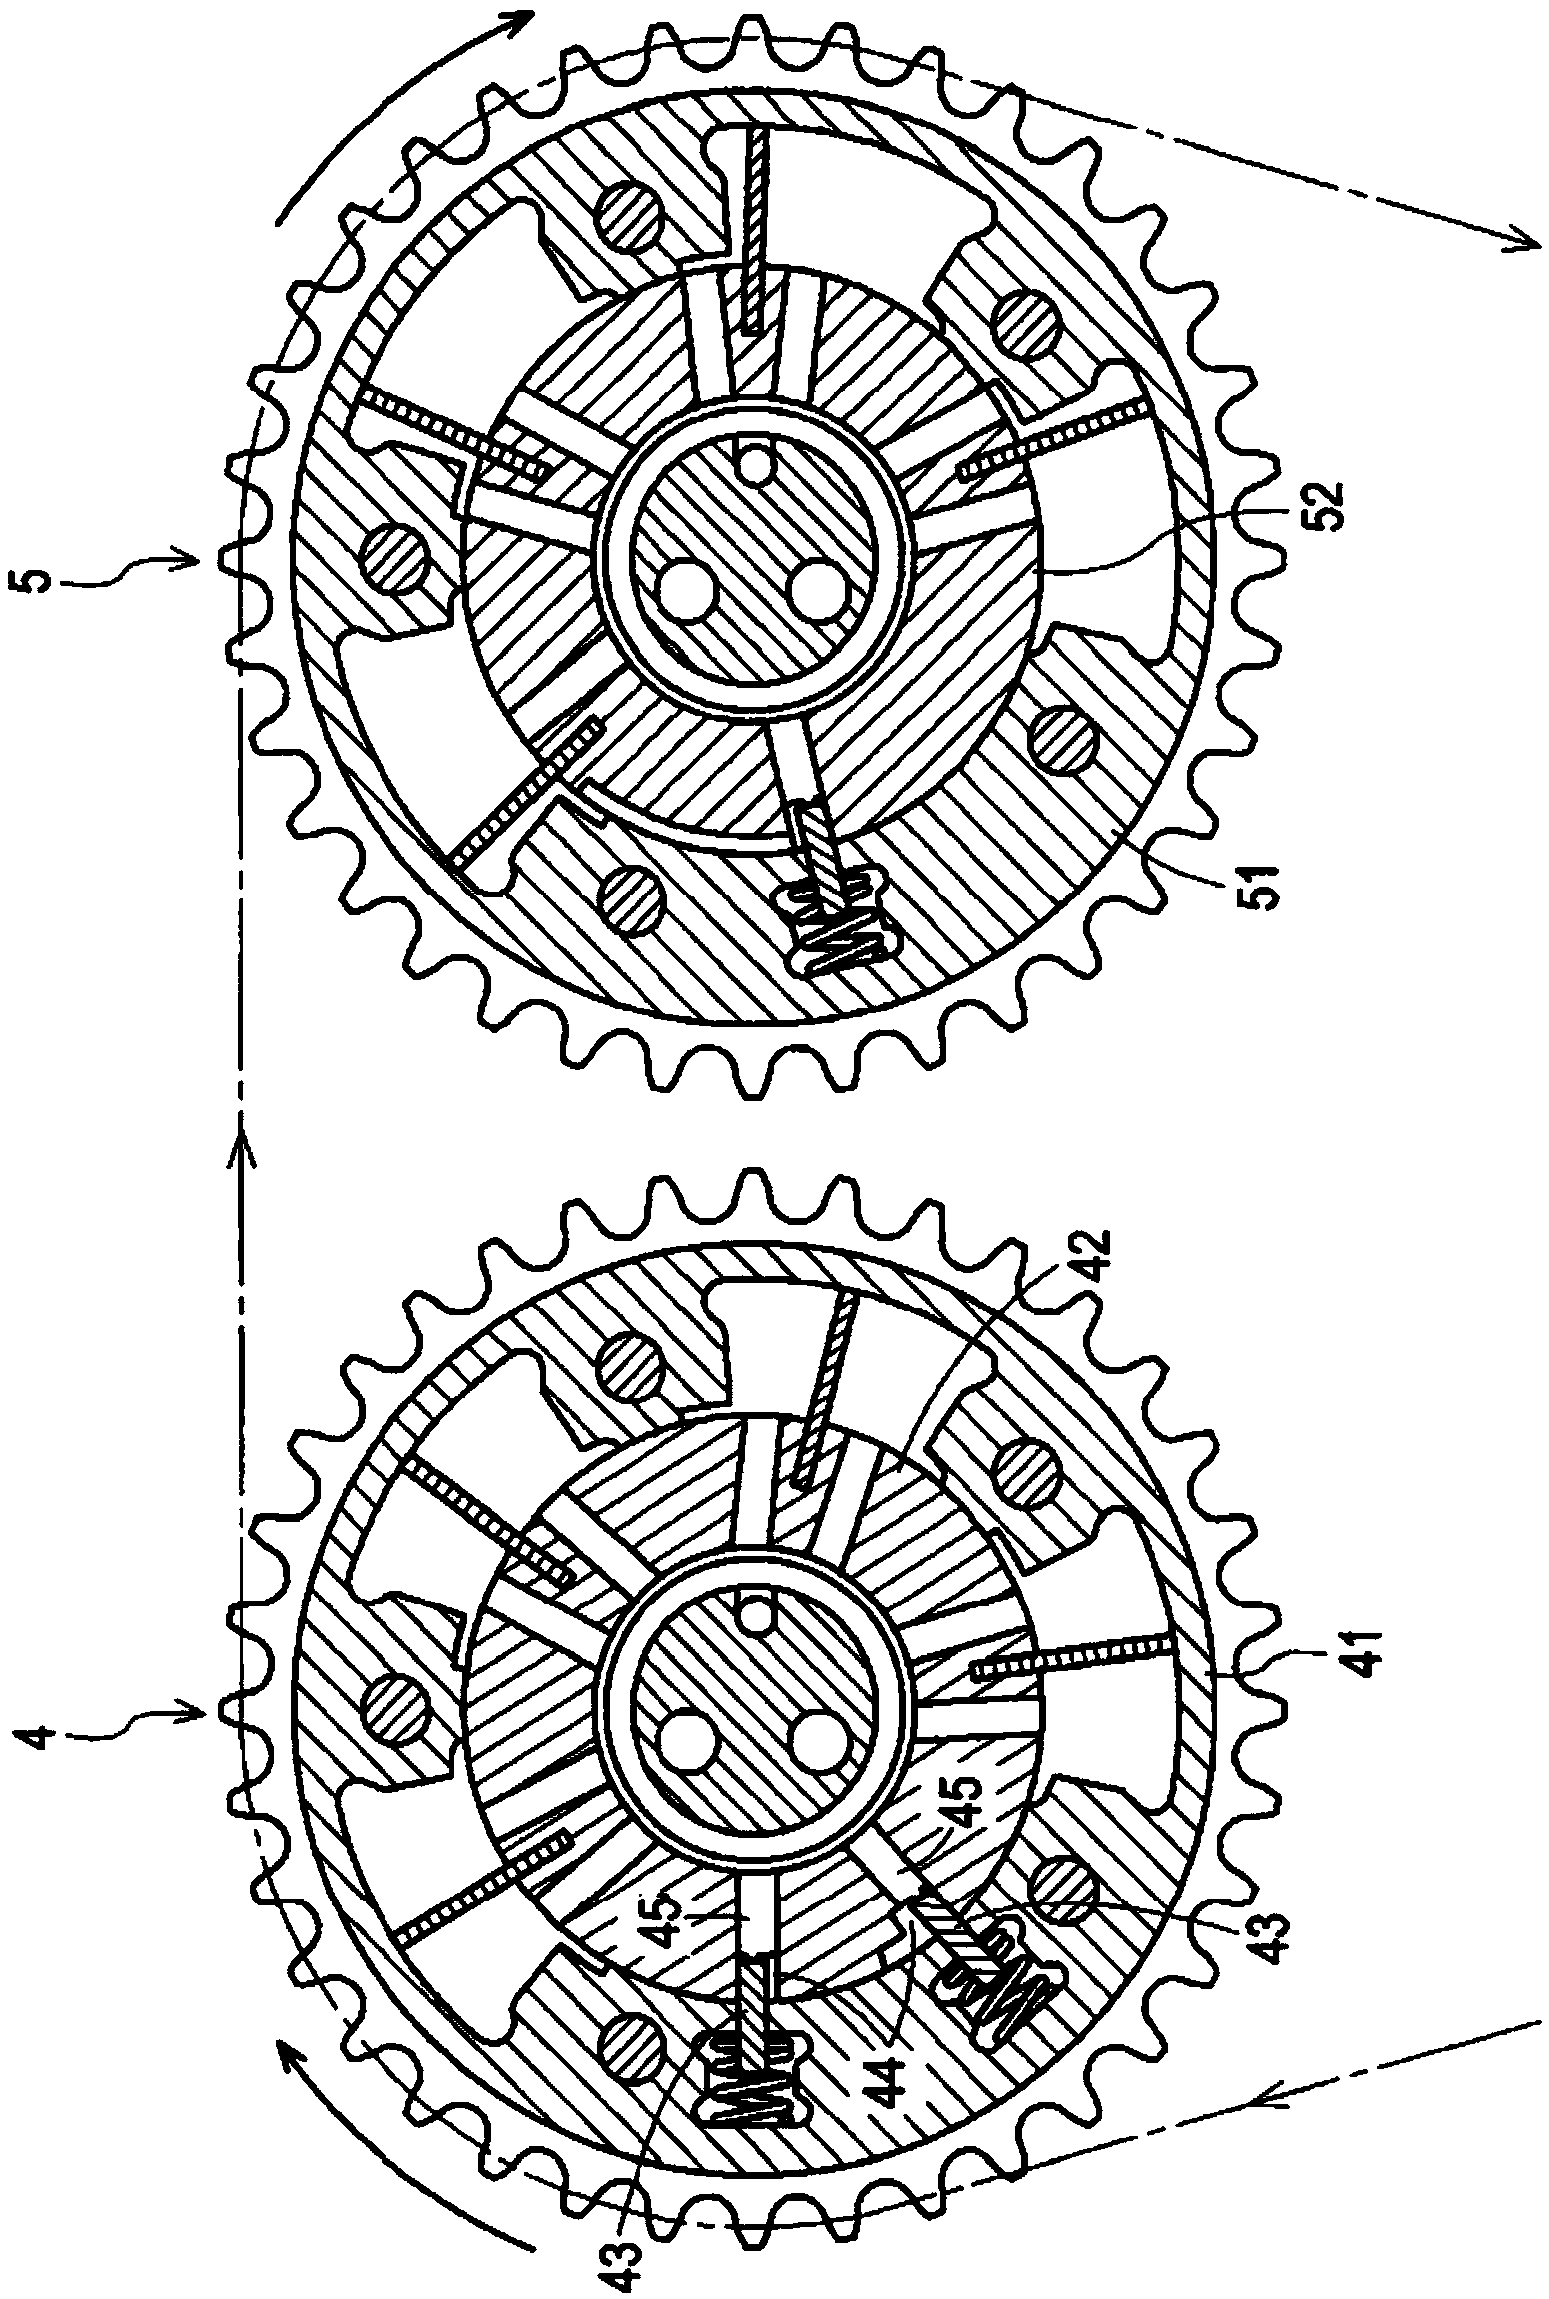 Engine control mechanism